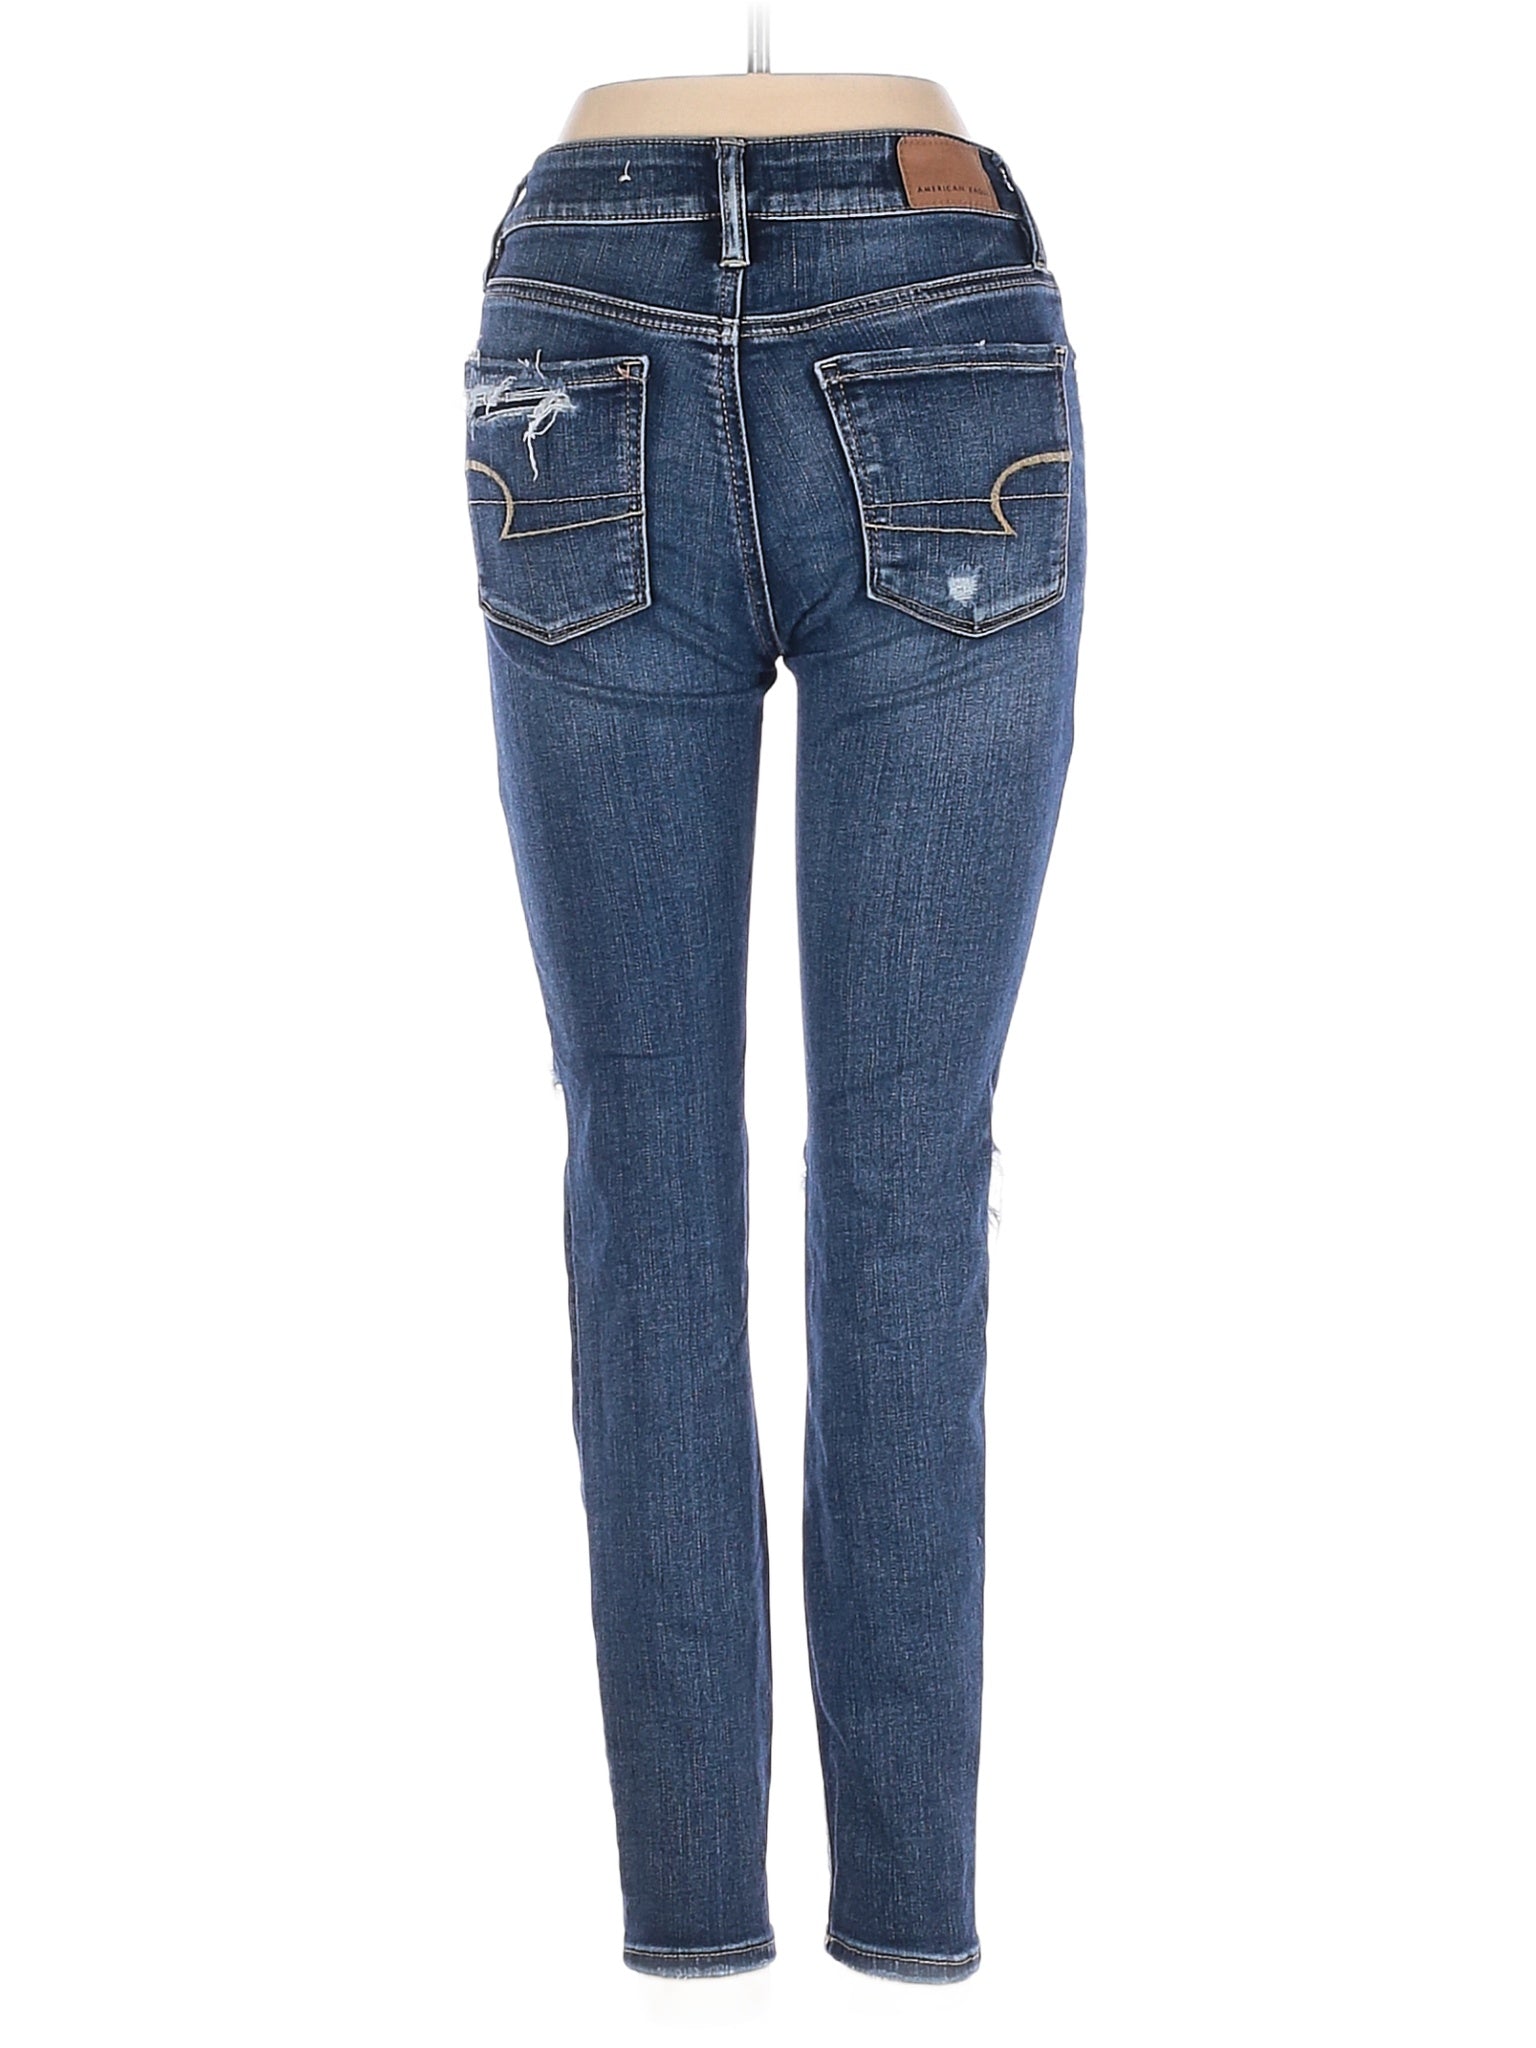 Jeans size - 0